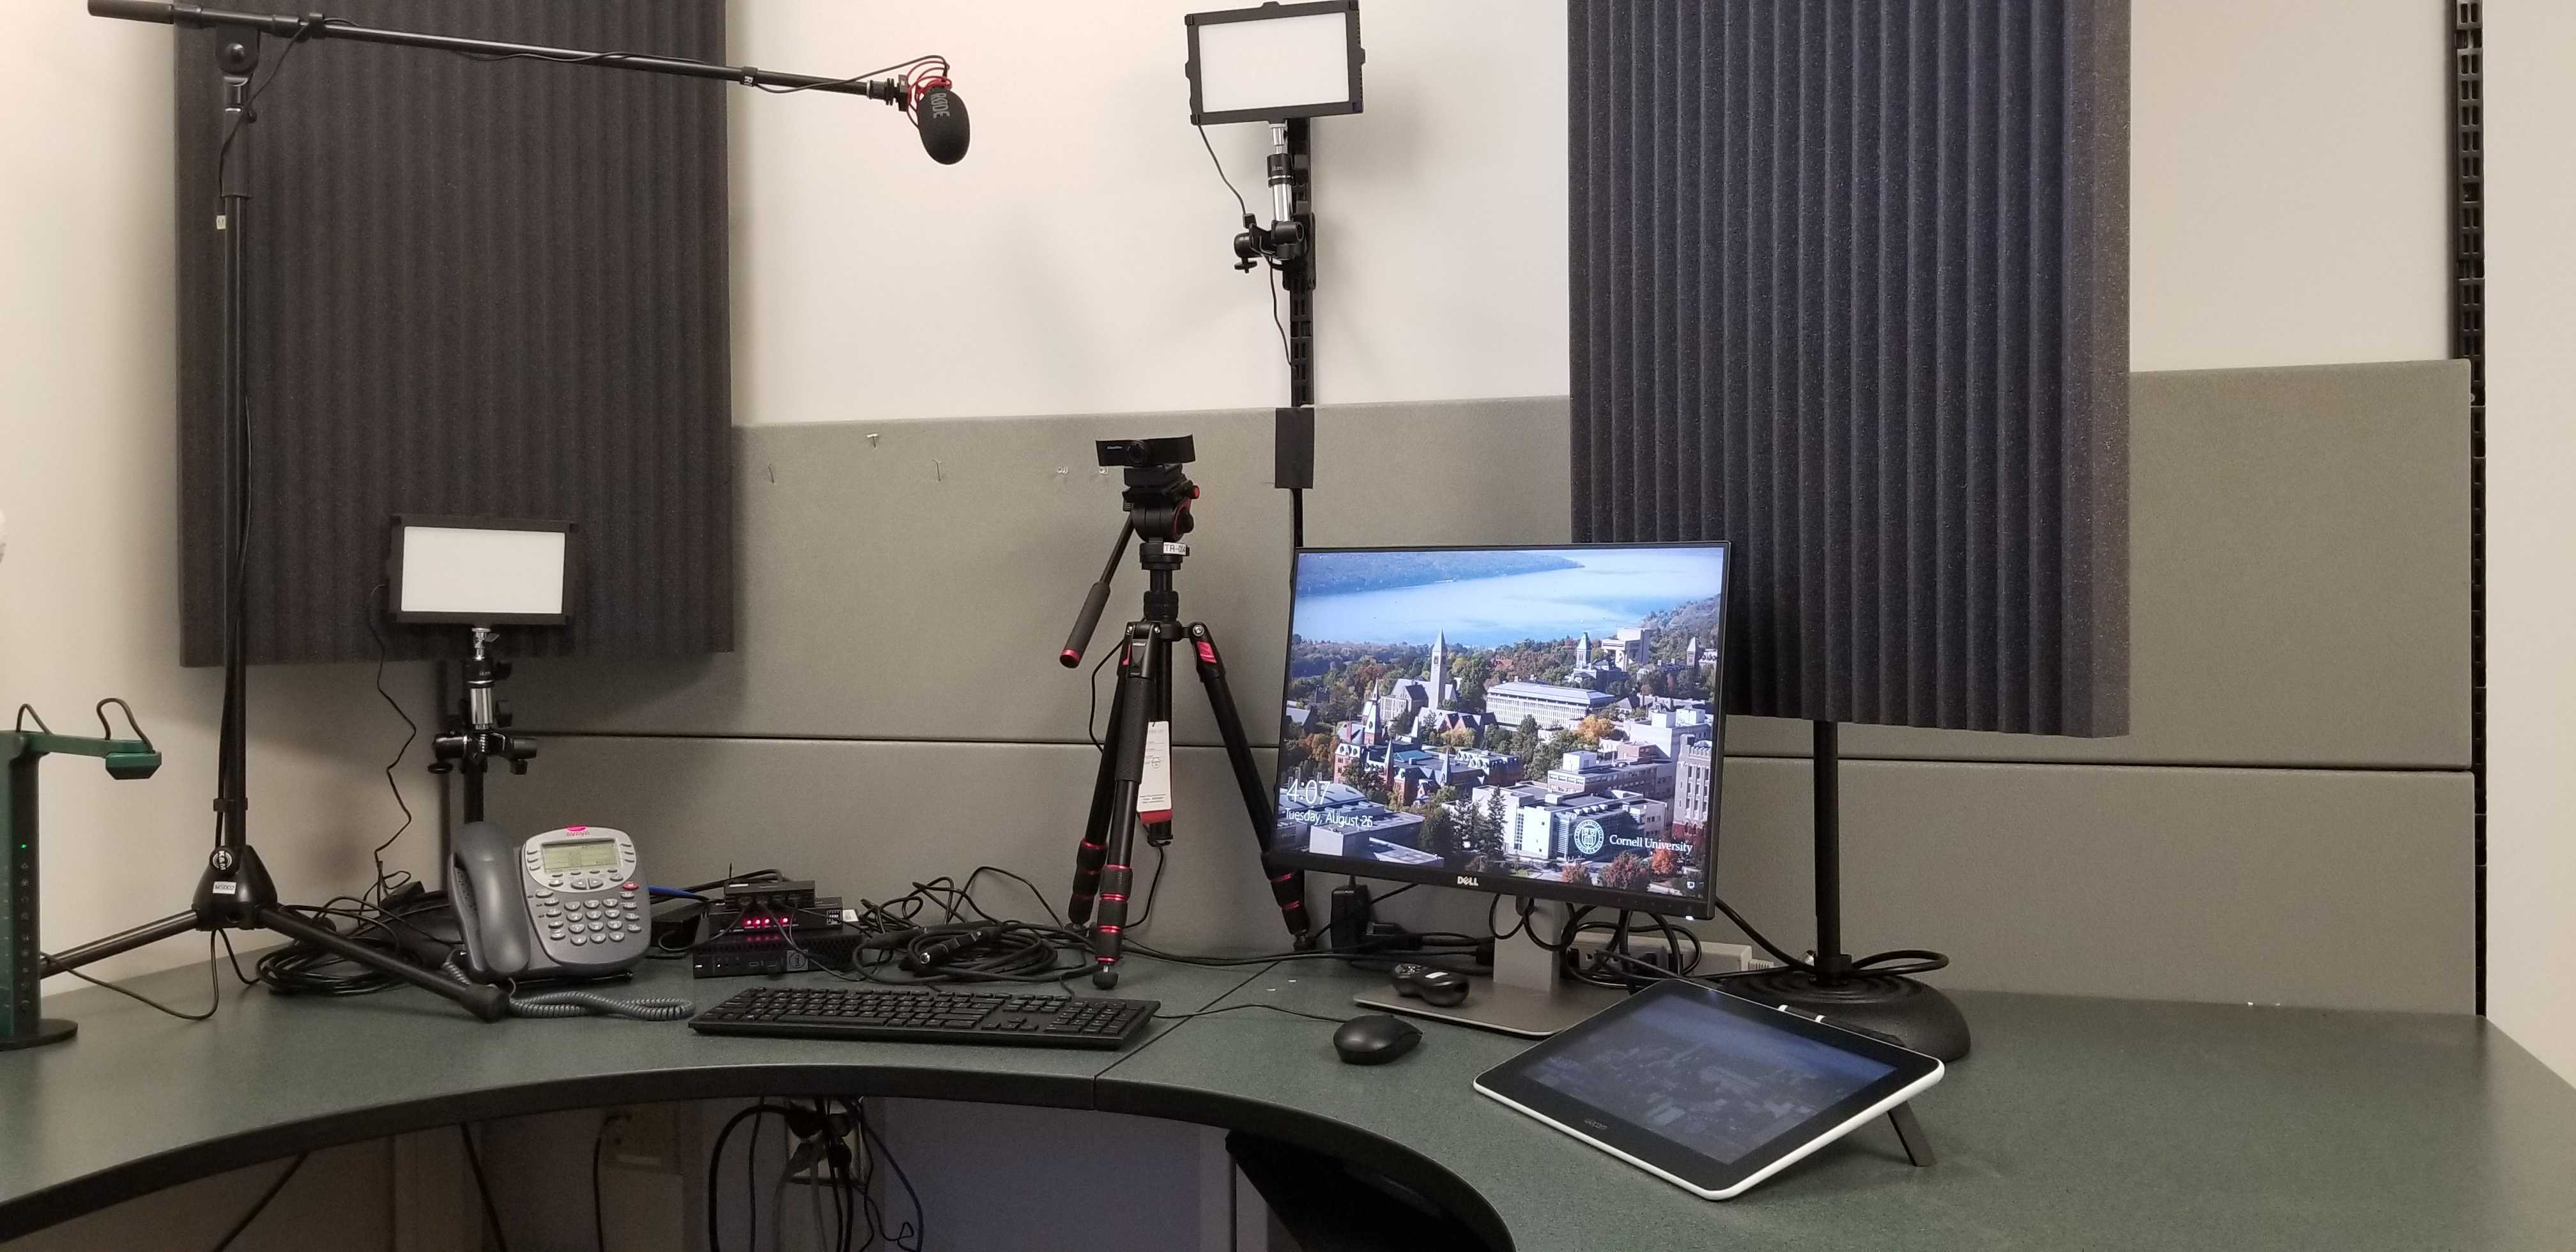 A view of the CTI self-recording studio